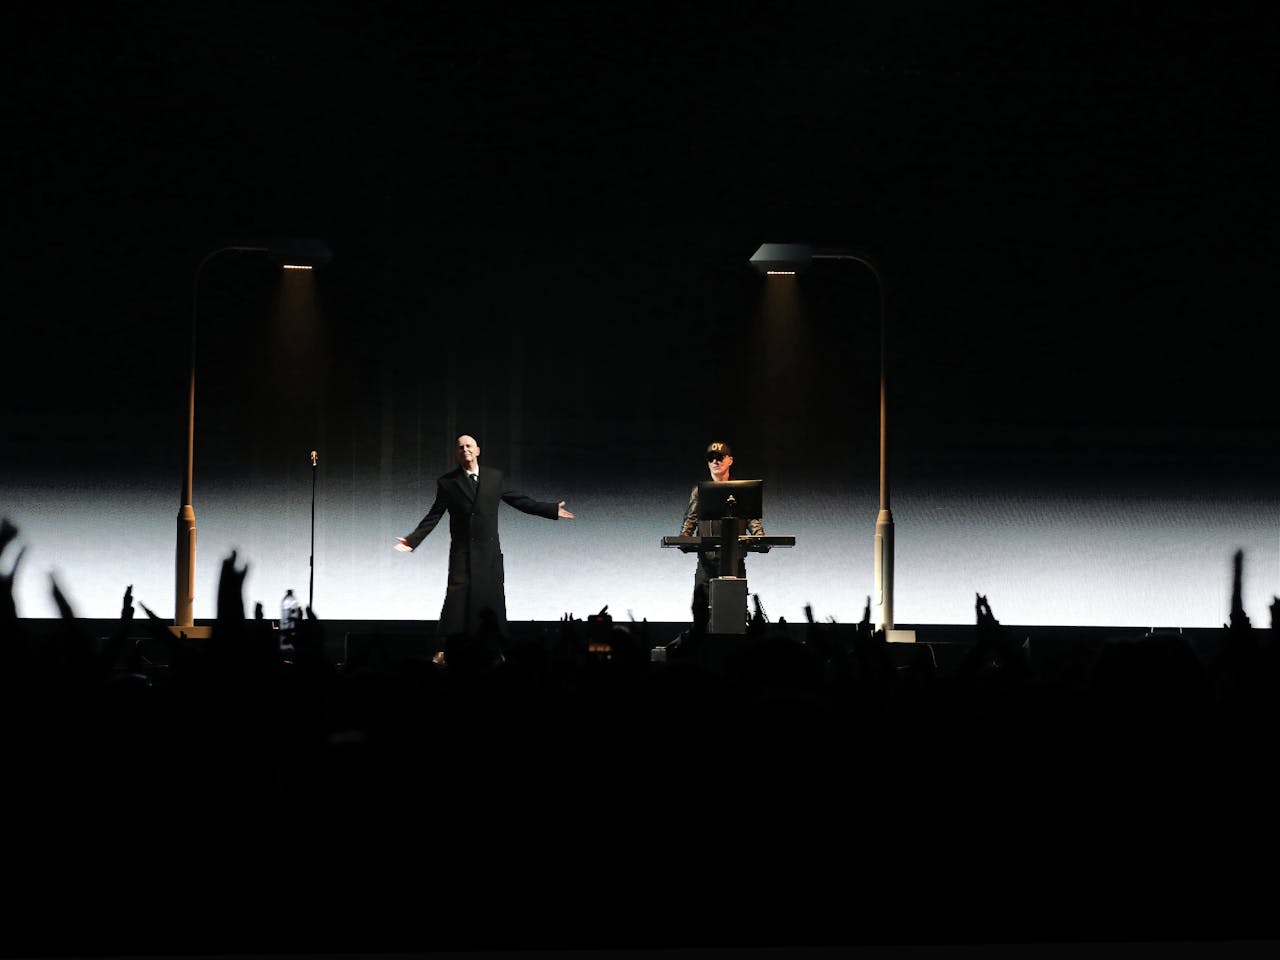 Pet Shop Boys Dreamworld: The Greatest Hits Live